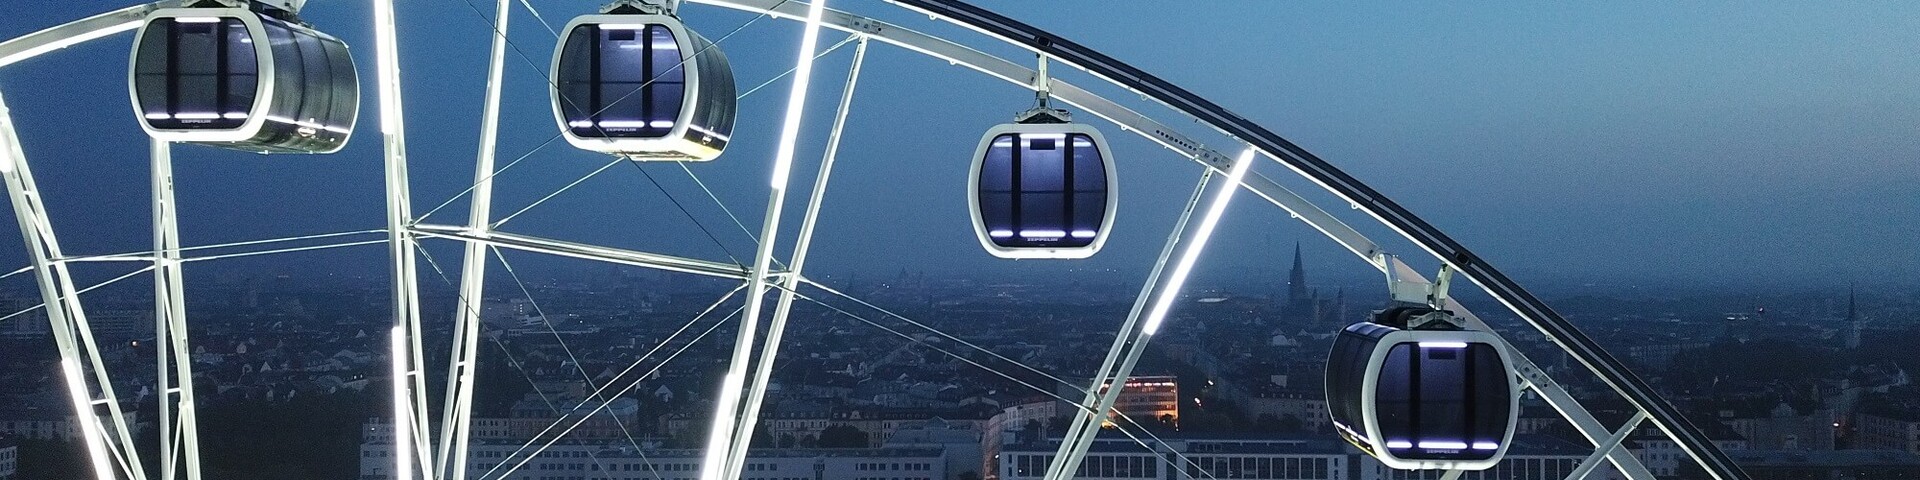 The Munich Ferris Wheel